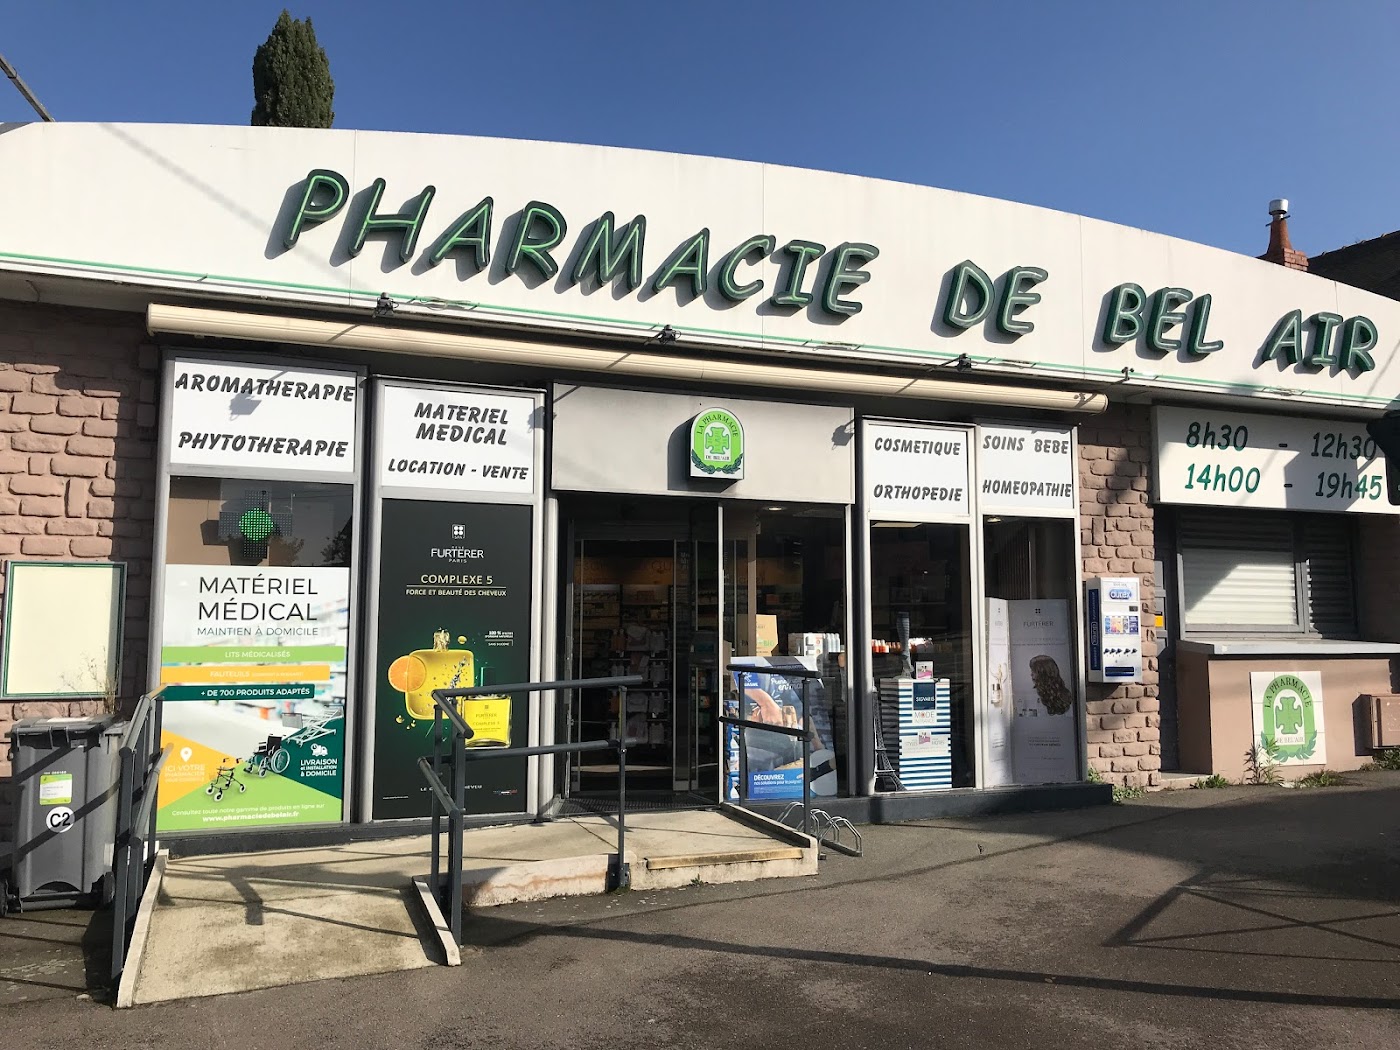 Pharmacie de Bel Air